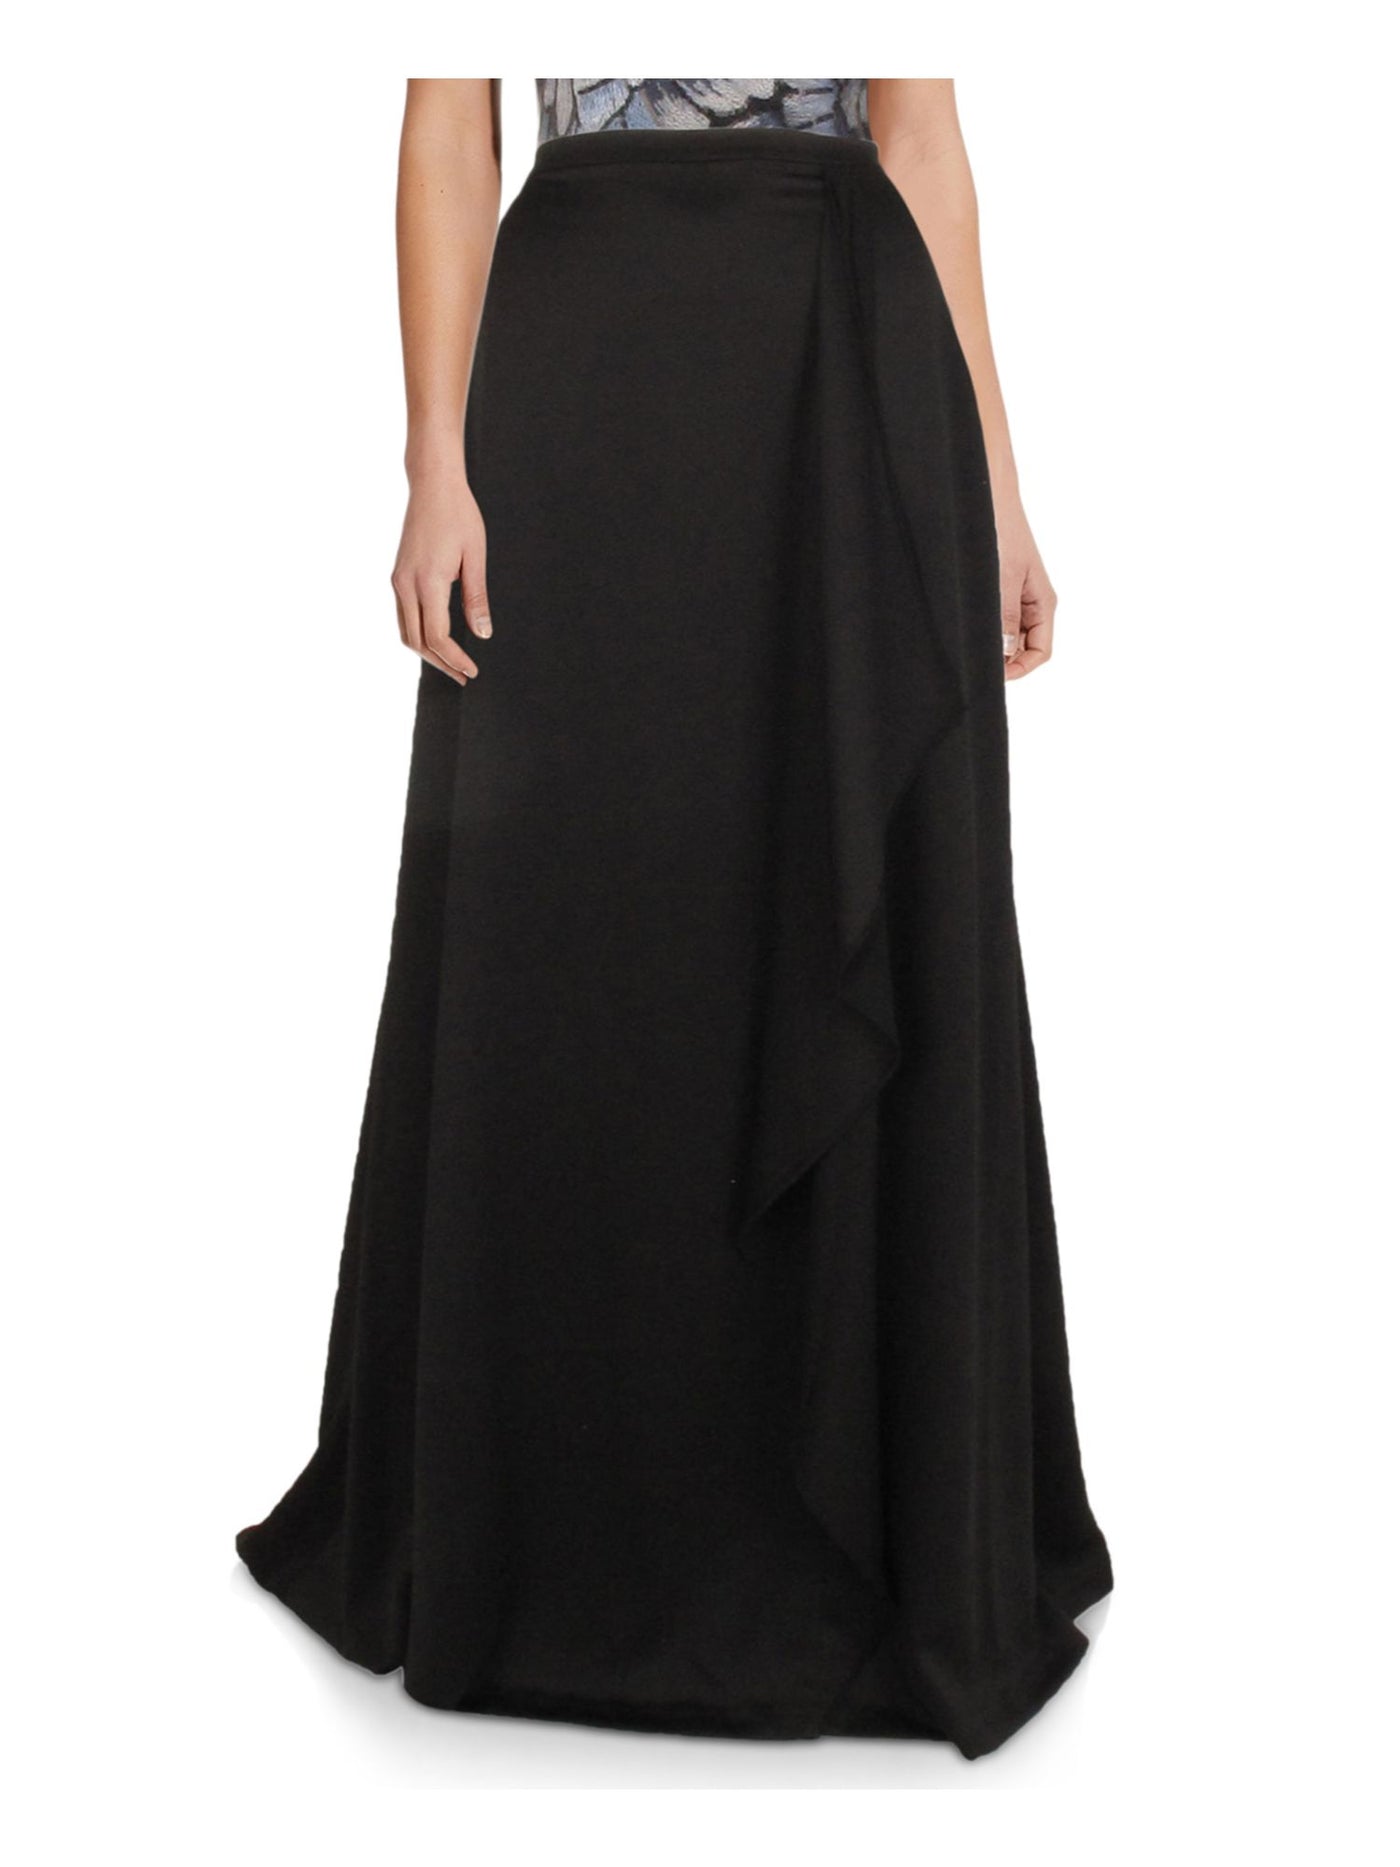 ADRIANNA PAPELL Womens Black Stretch Ruffled Zippered Satin Full-Length Evening A-Line Skirt 6